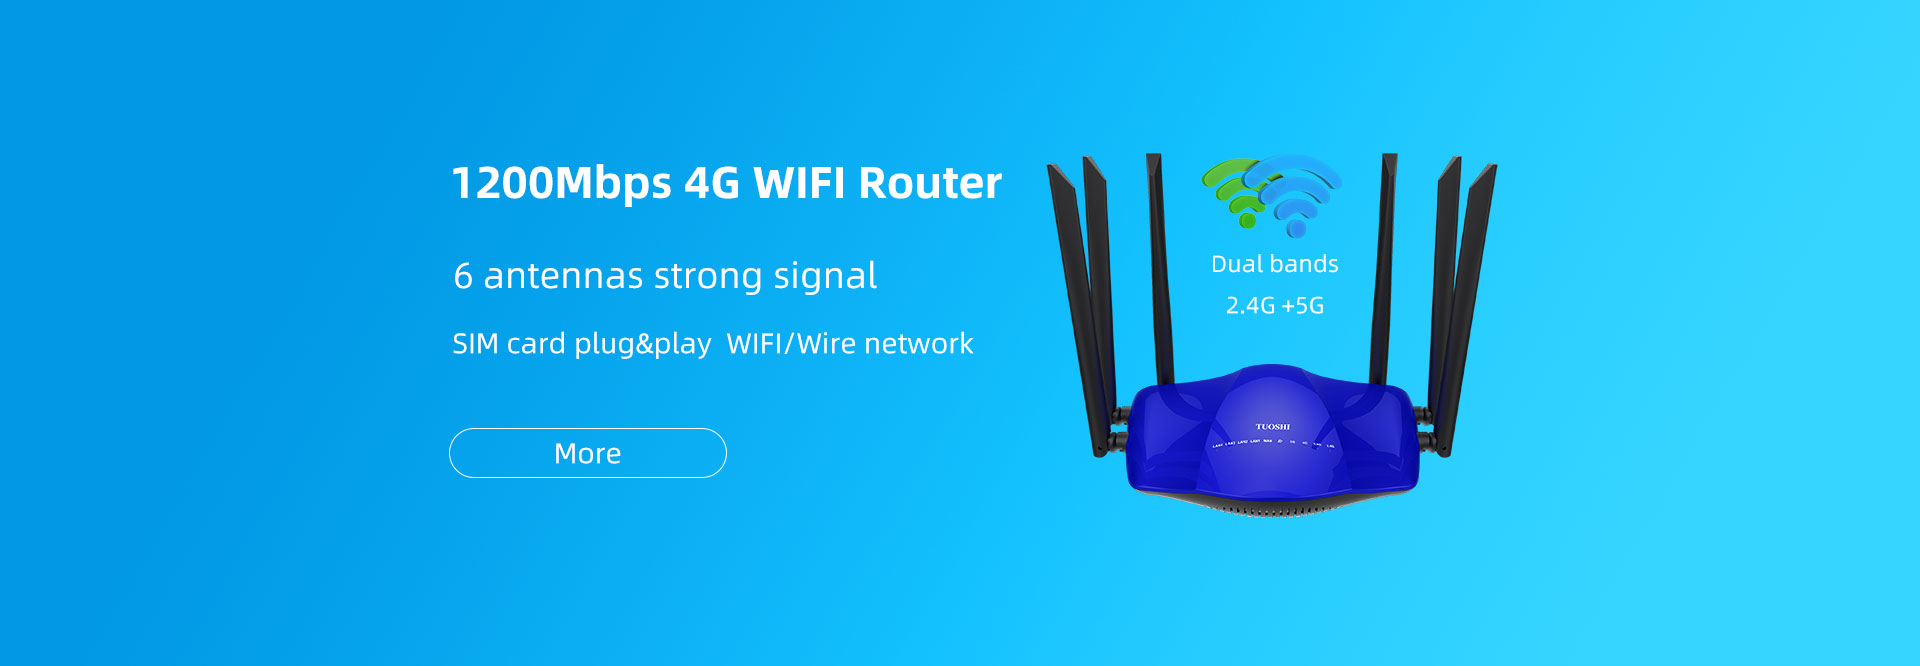 4G router 6 antennas